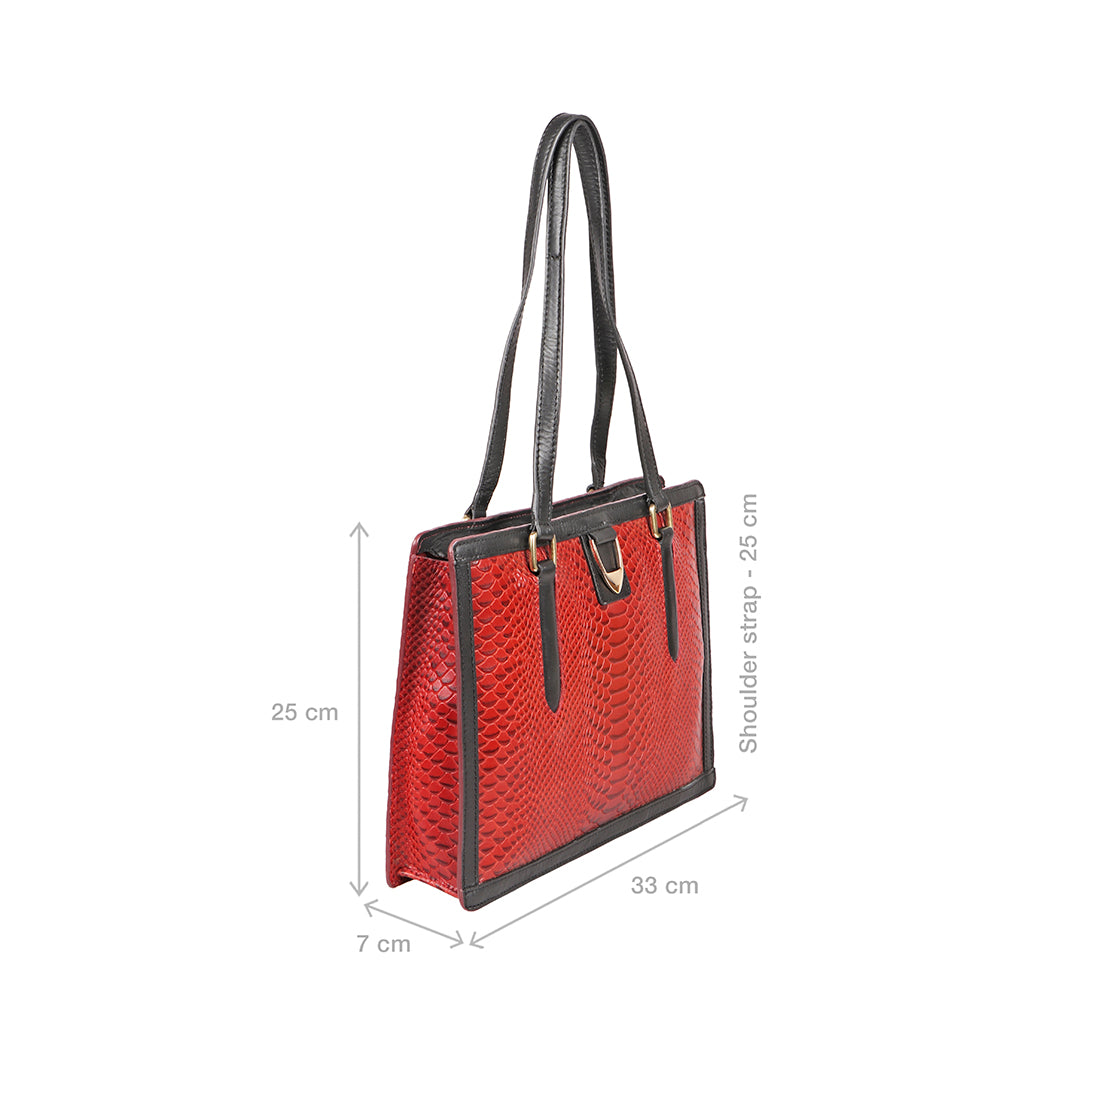 Laidan Fashion Women's Shoulder Bag Nylon Messenger Bag,Red, Size: 20